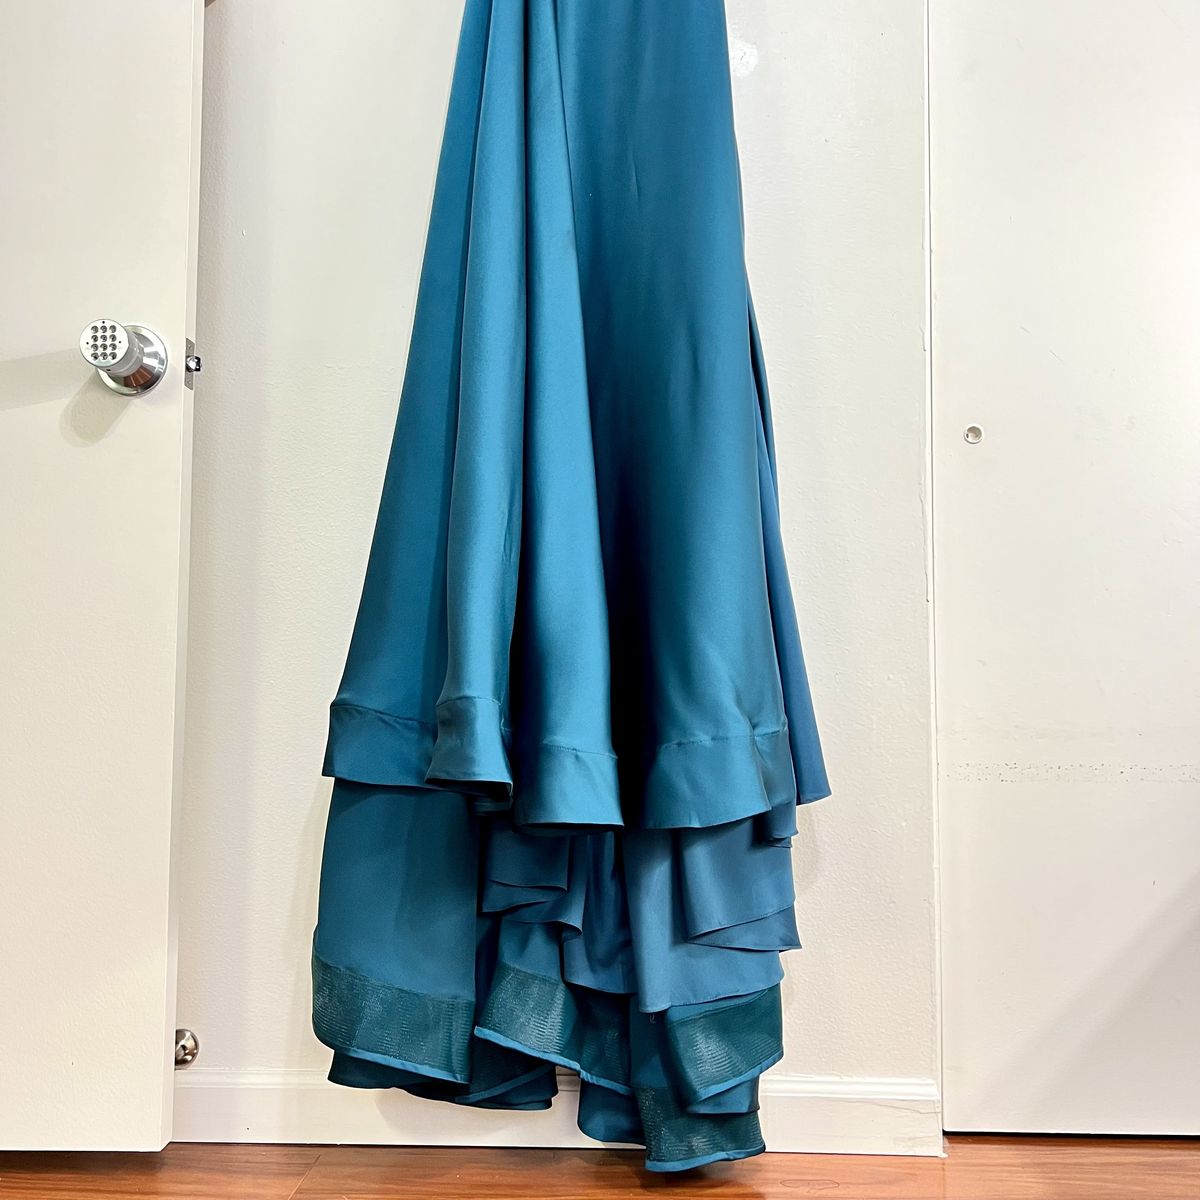 Style 28571 La Femme Size 6 Blue Side Slit Dress on Queenly